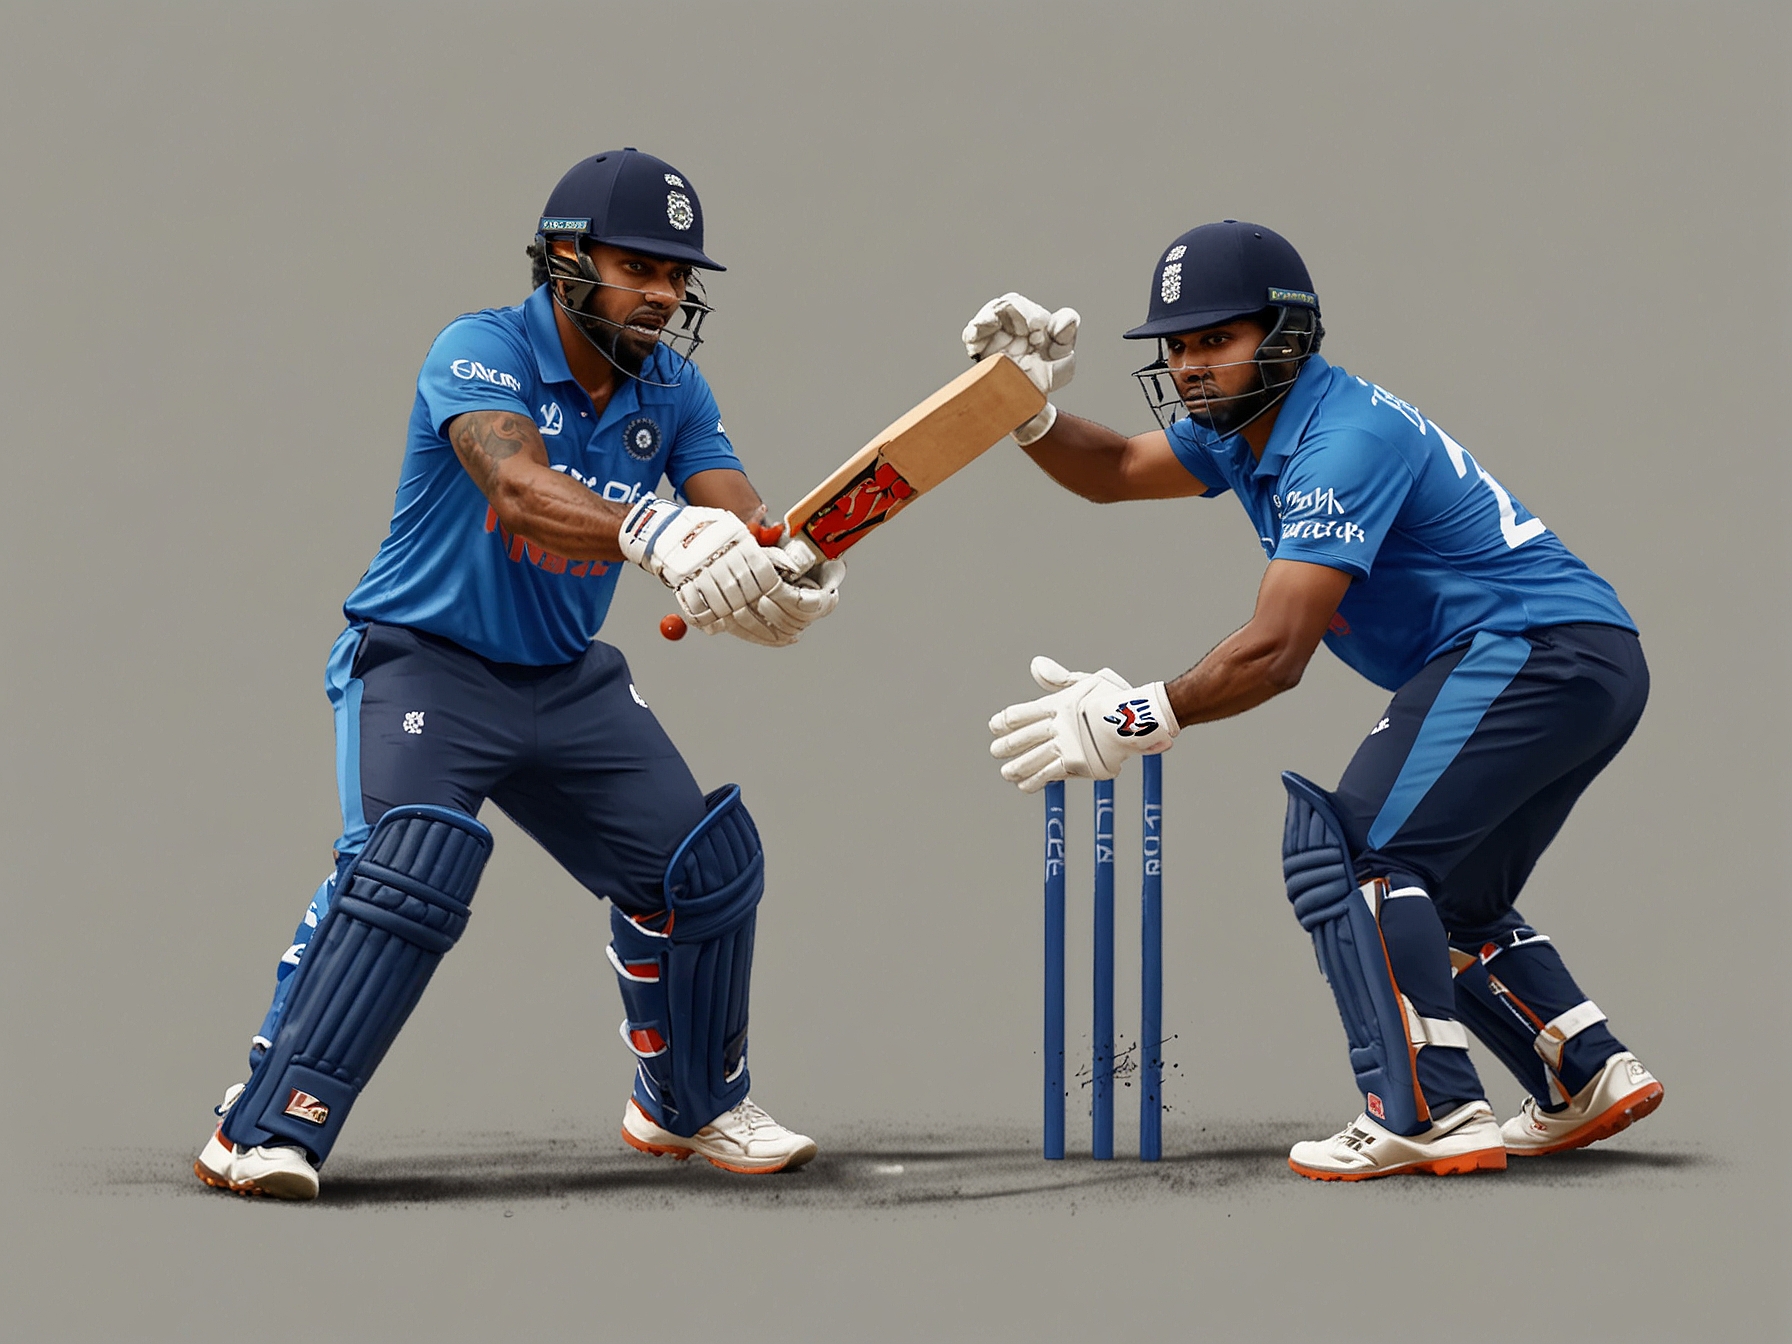 Suryakumar Yadav unleashing his signature sweep shot against Rashid Khan, encapsulating the playful banter between the two cricket stars during the intense T20 World Cup match.